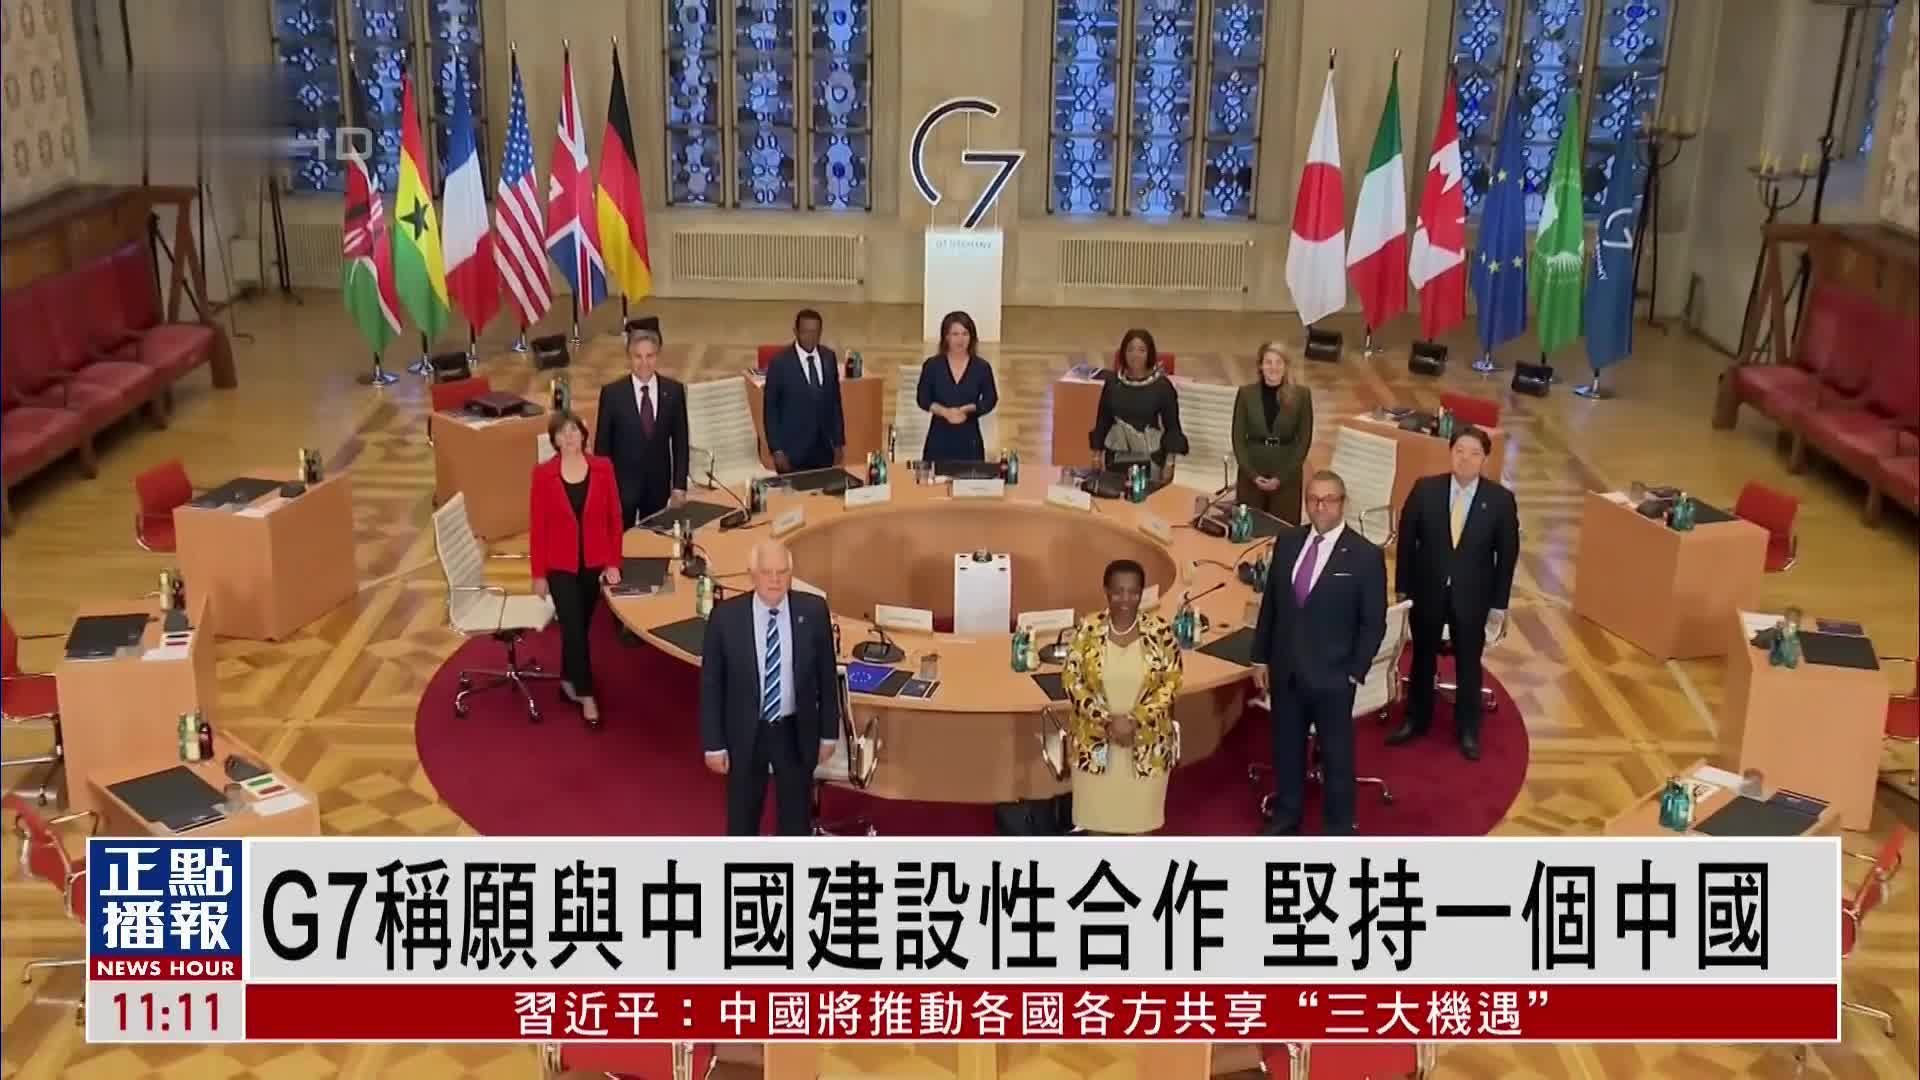 G7称愿与中国建设性合作 坚持一个中国